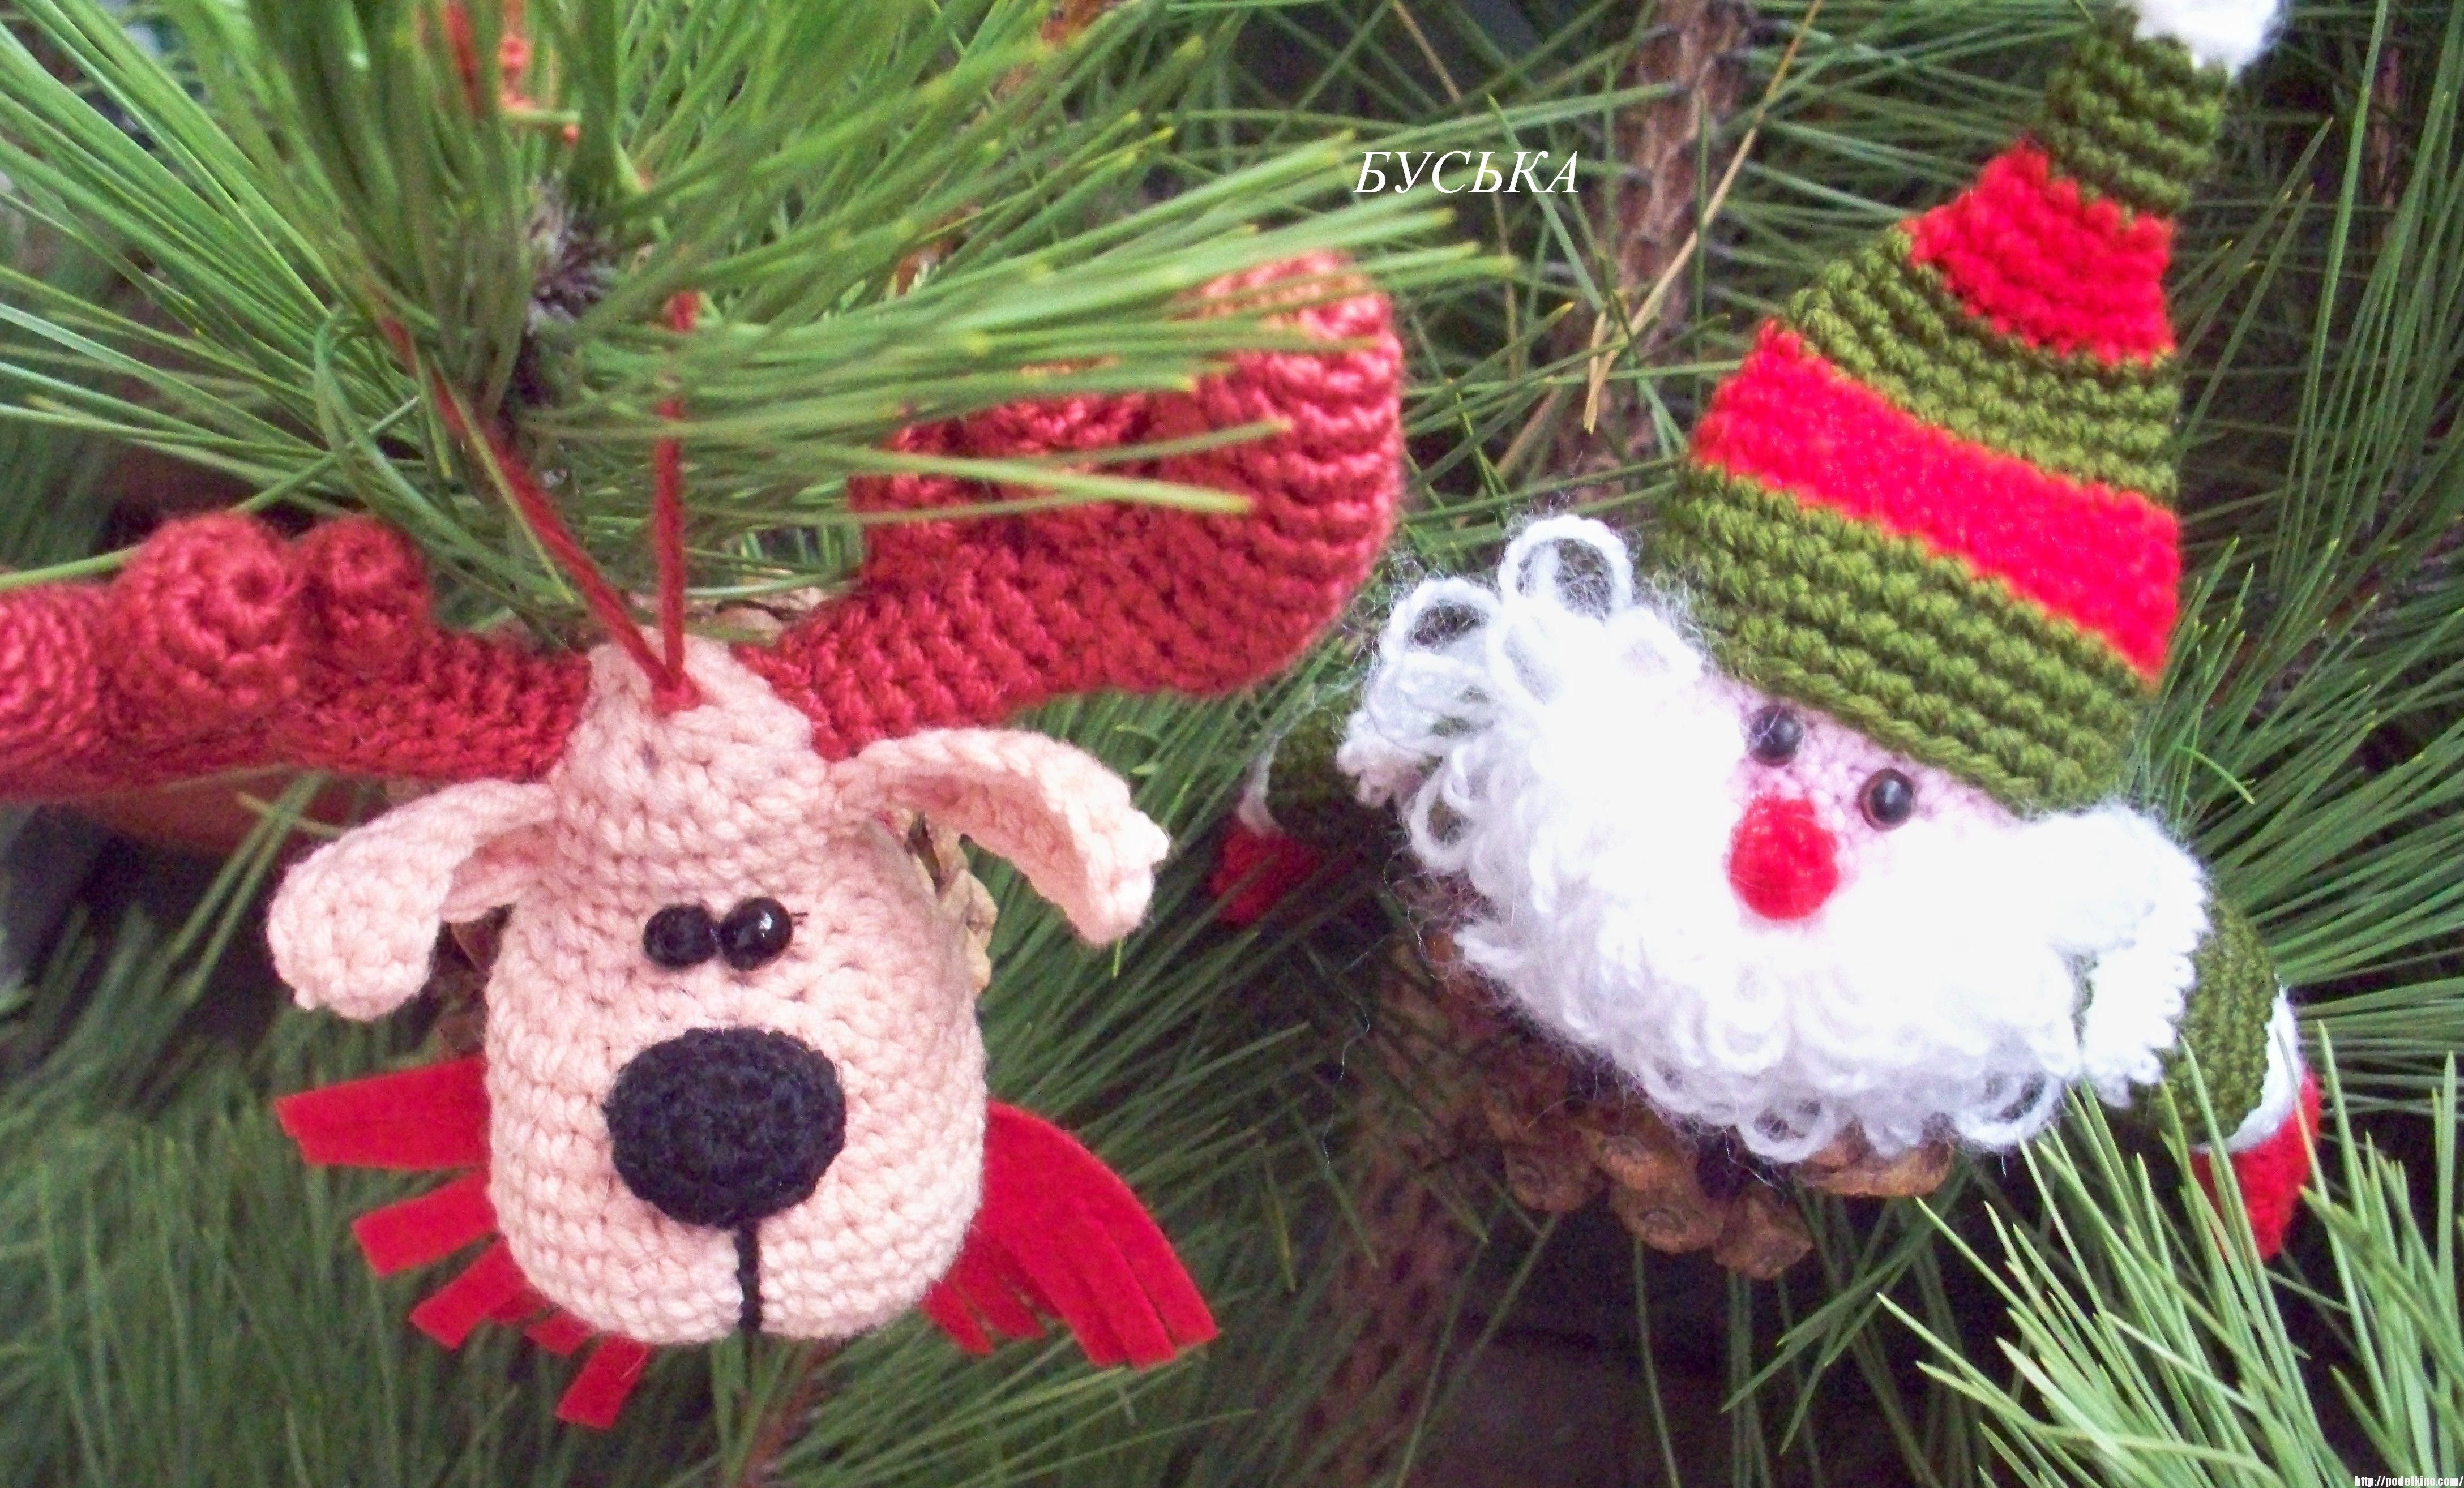 Christmas toys knitting needles wallpaper and image